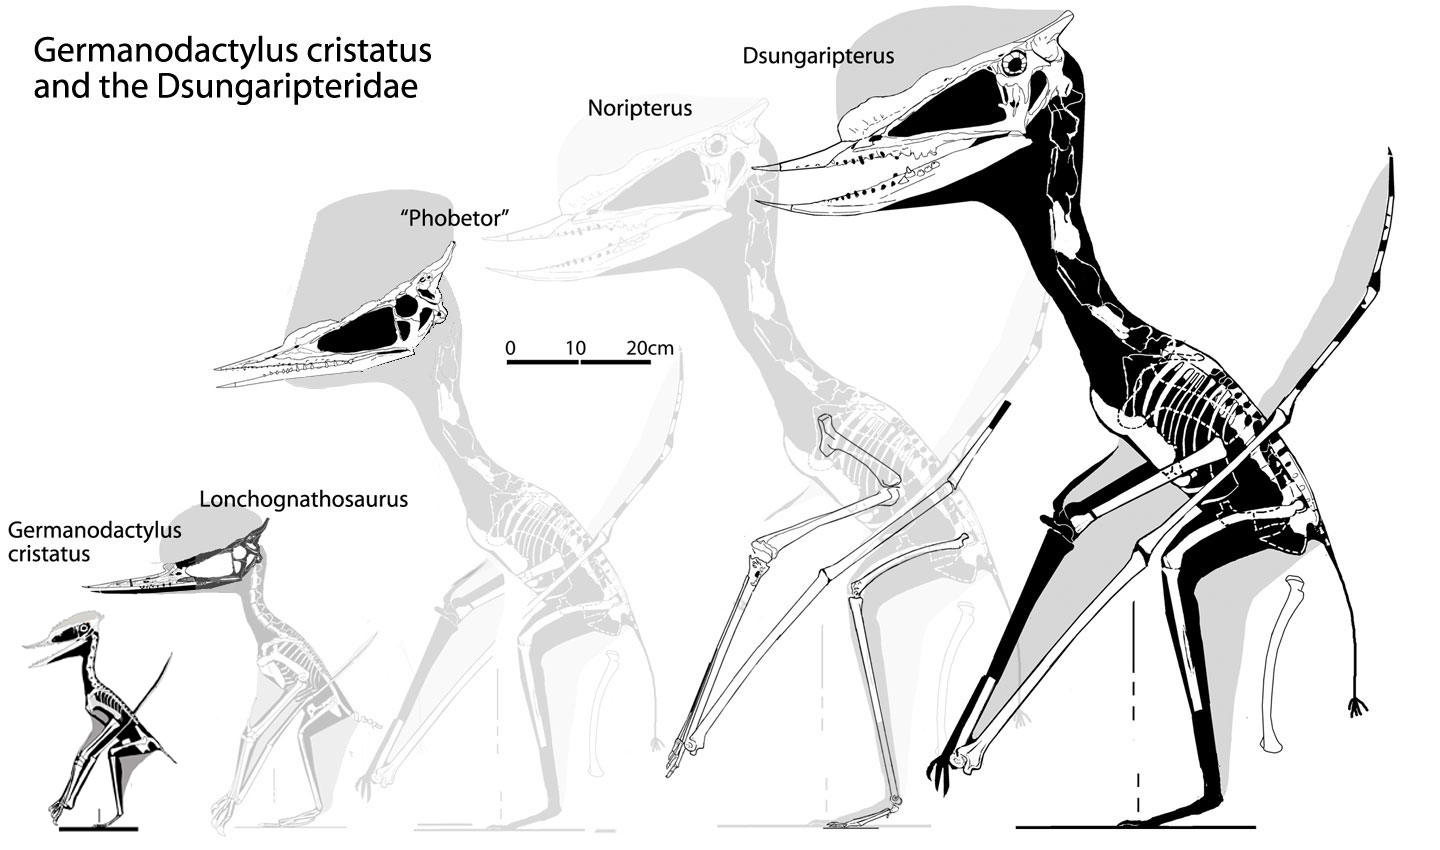 Germanodactylus and the Dsungaripteridae